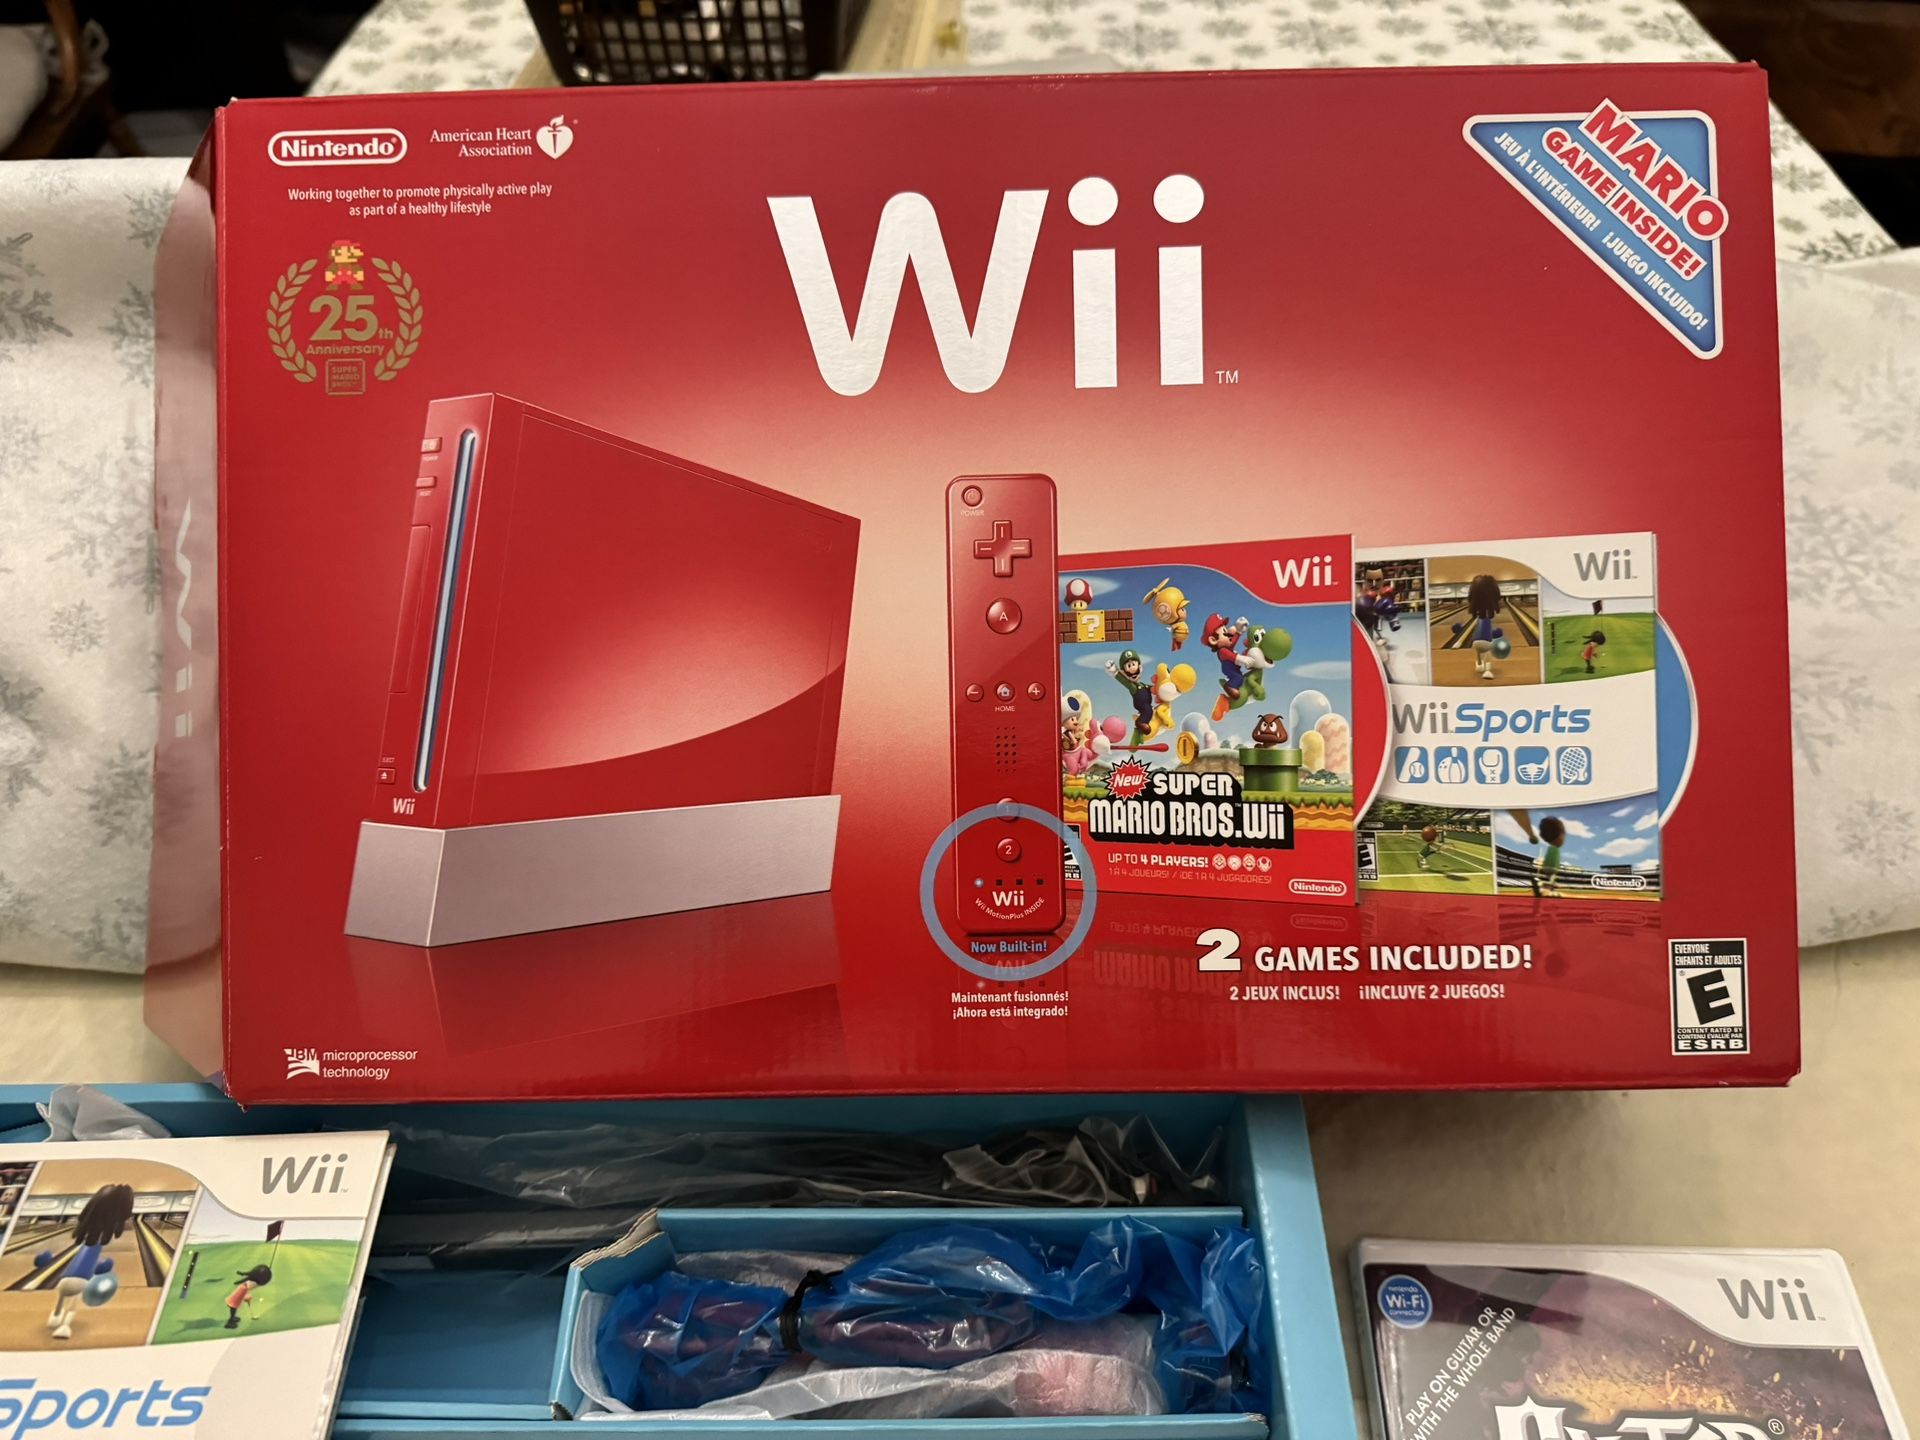 Nintendo Wii original + games 